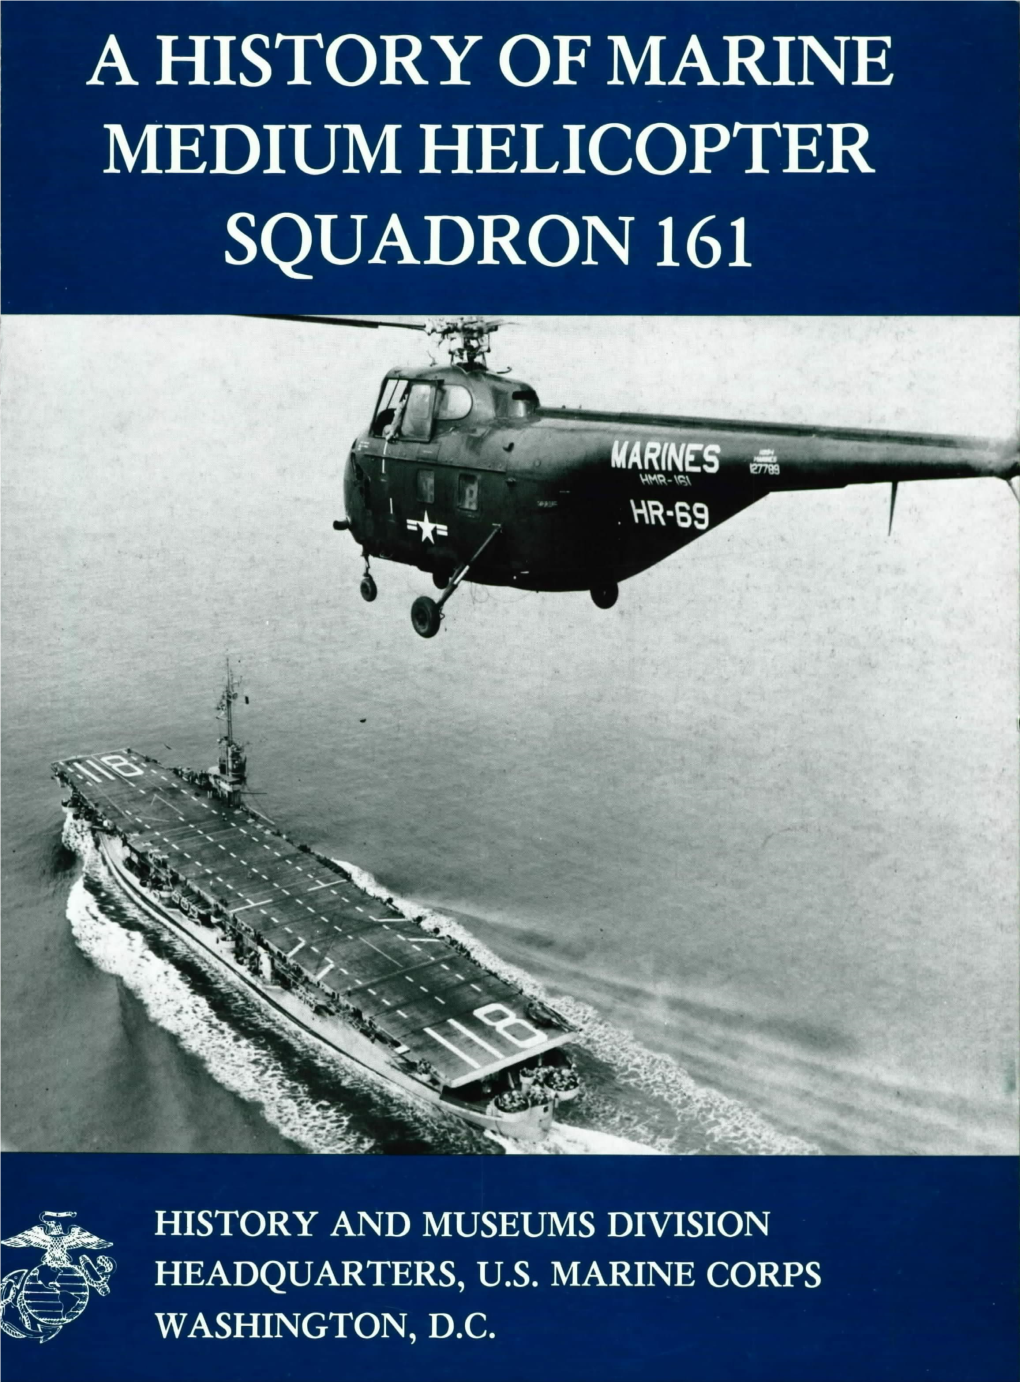 A History of Marine Medium Helicopter Squardron 161 (HMR-161)